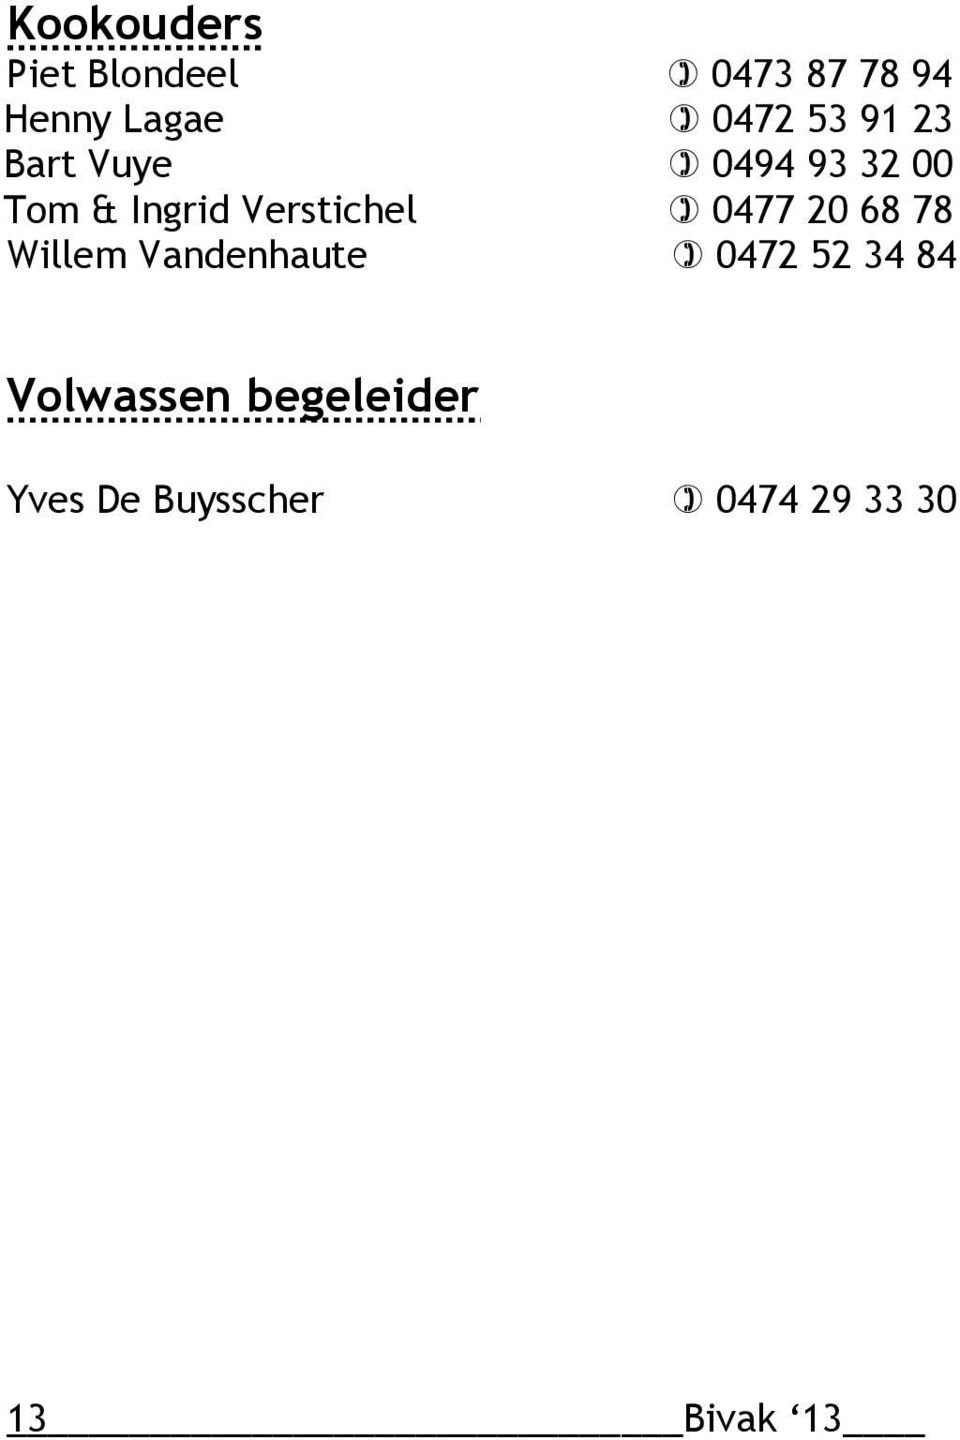 Verstichel 0477 20 68 78 Willem Vandenhaute 0472 52 34